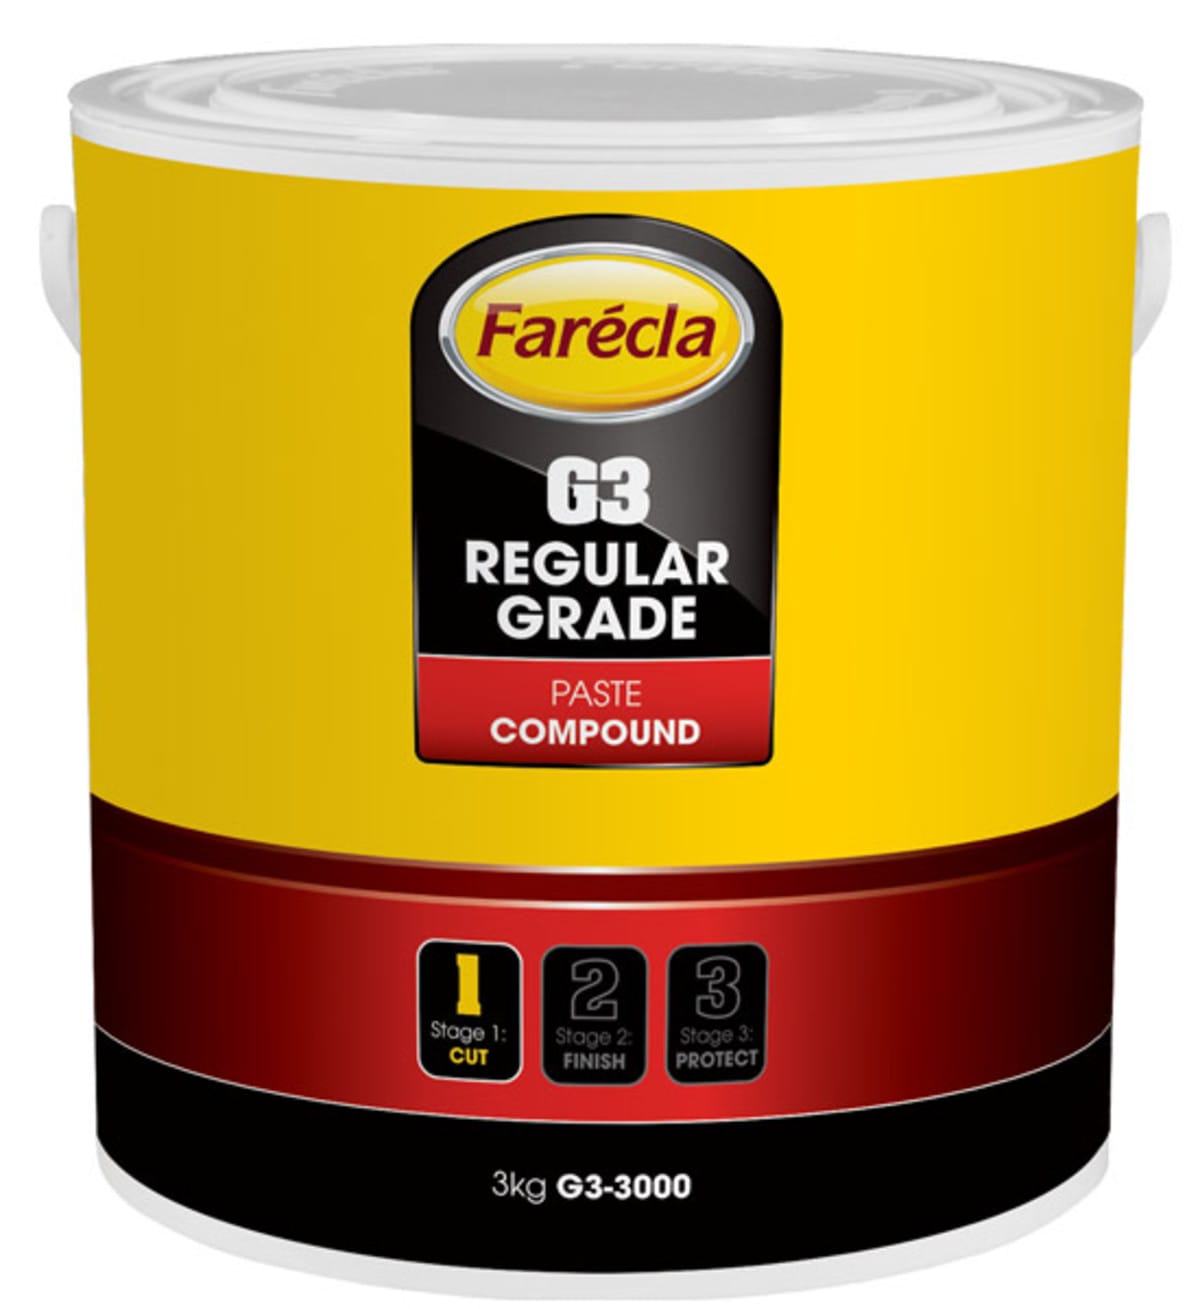 Farecla G3 Regular Paste Compound 3kg